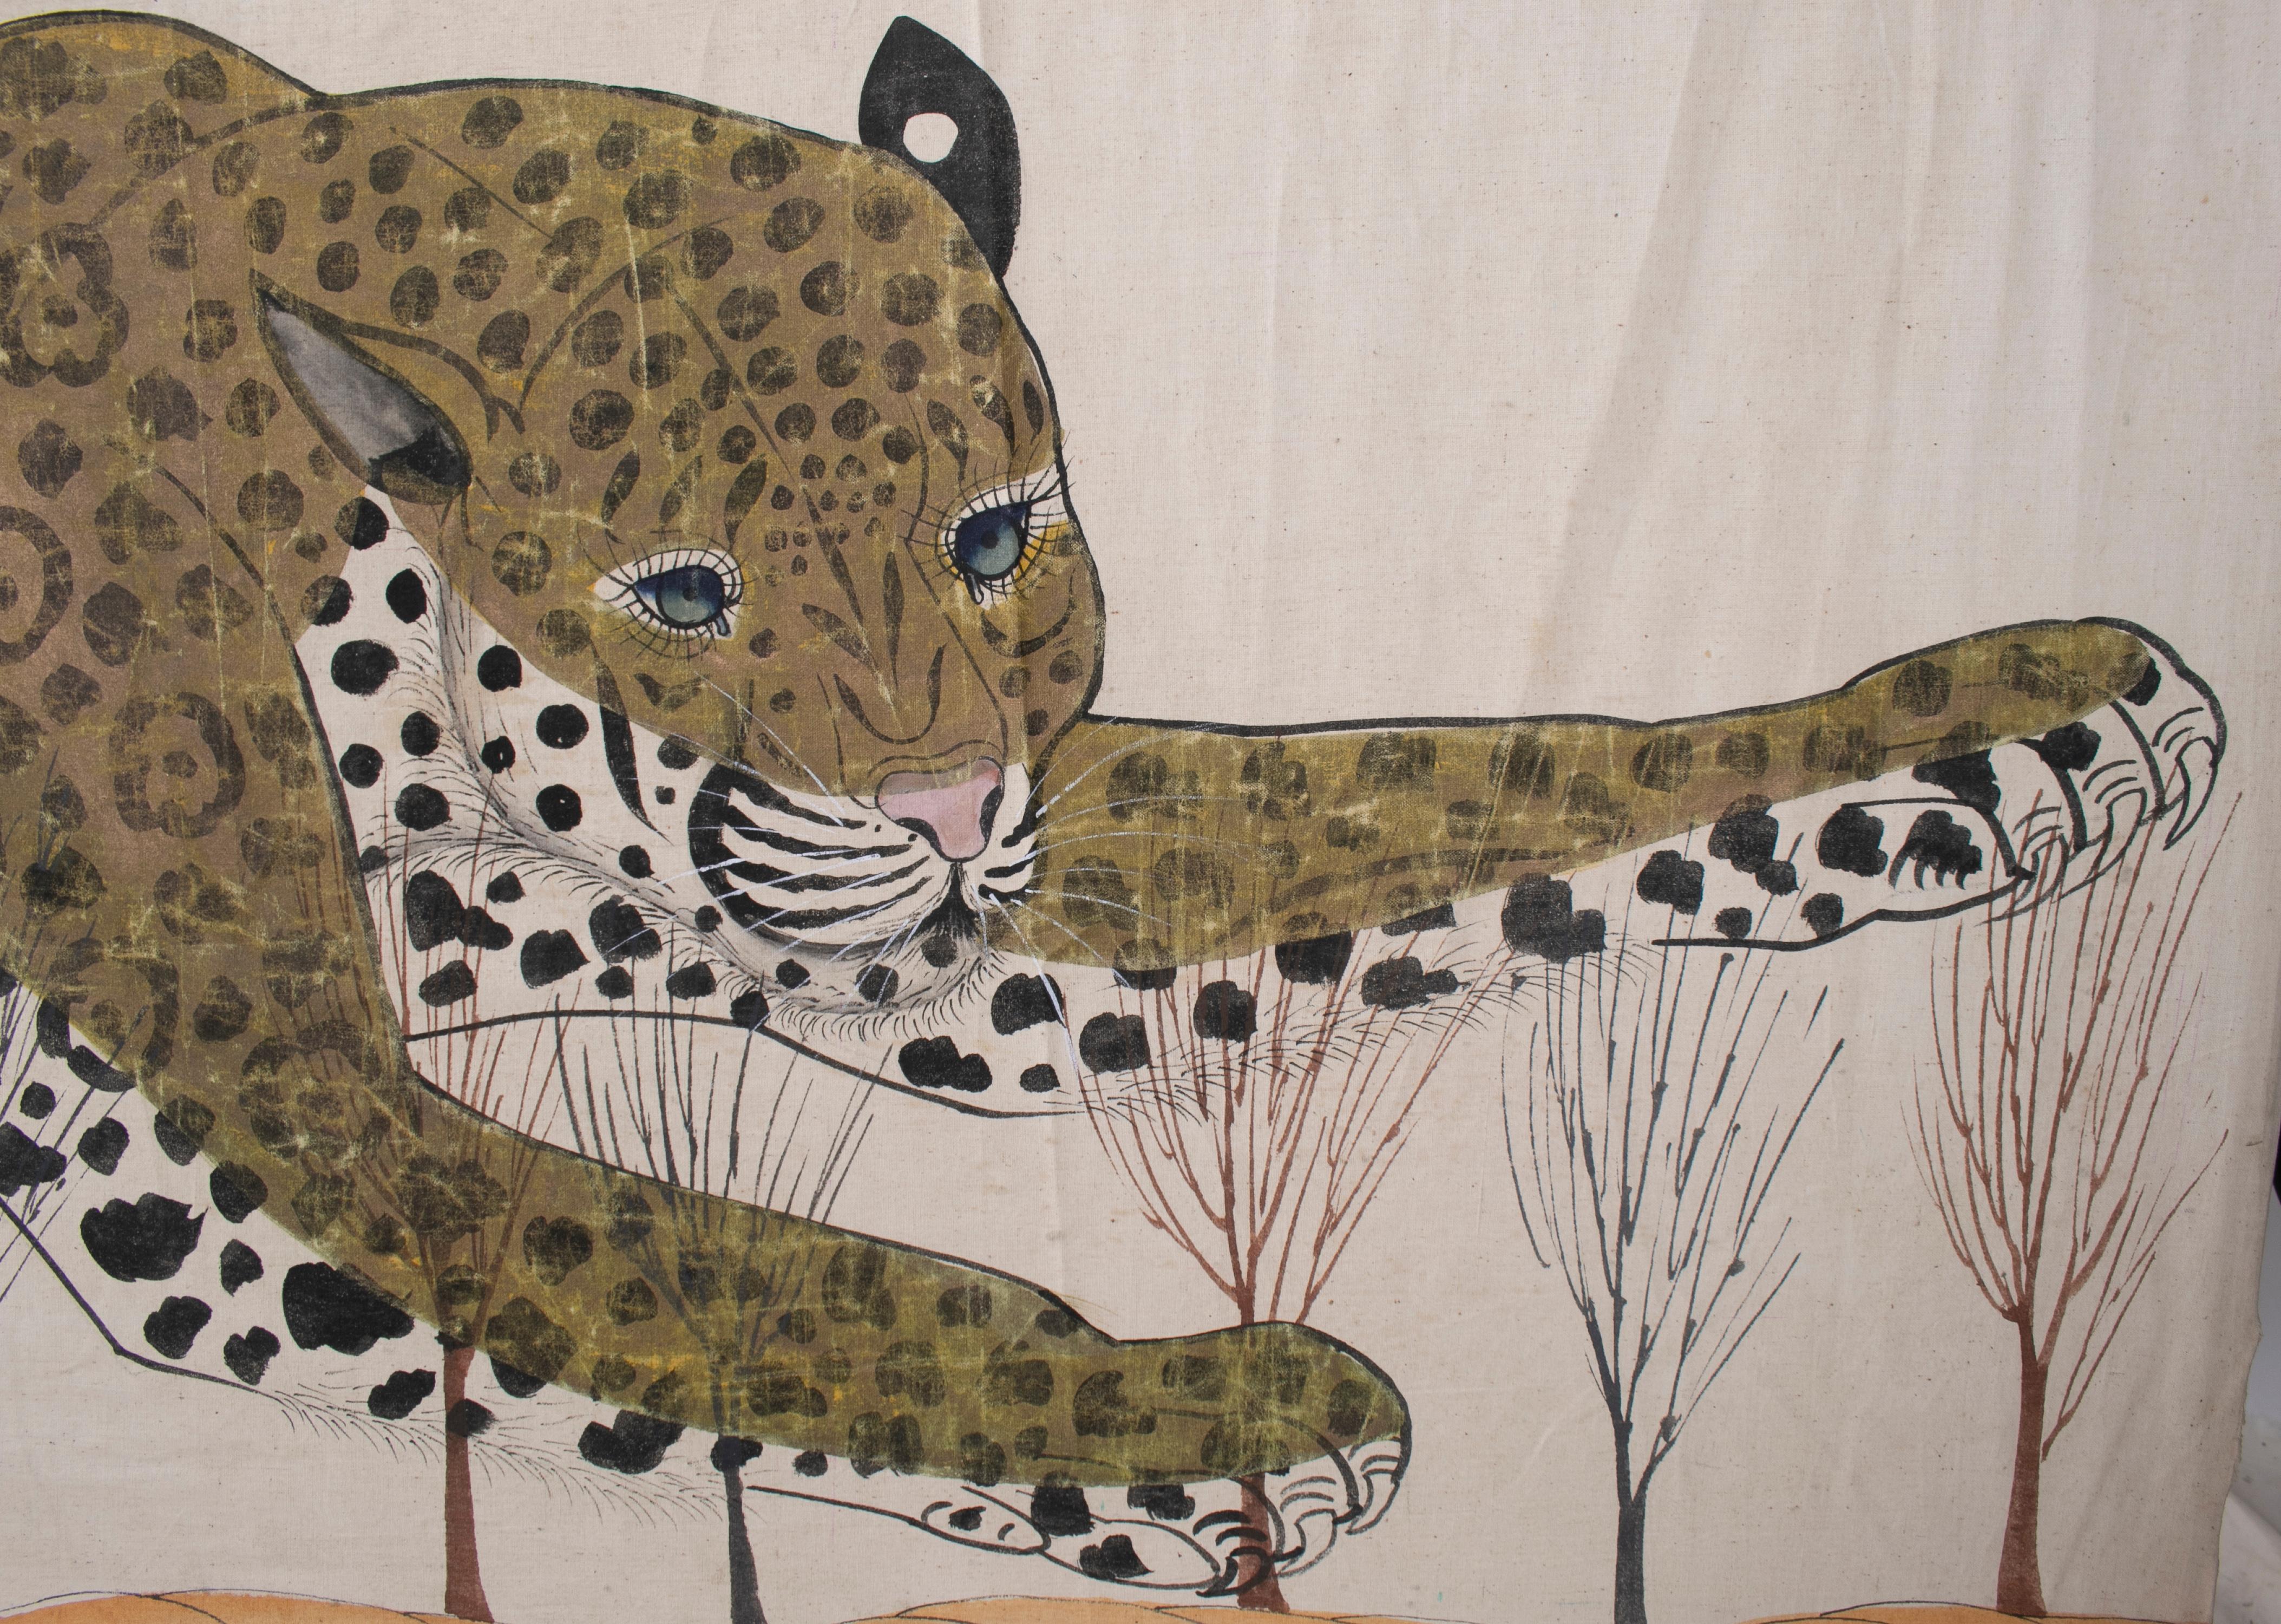 1970s Jaime Parlade designer hand drawn cheetah on canvas
Tiene un agujero.